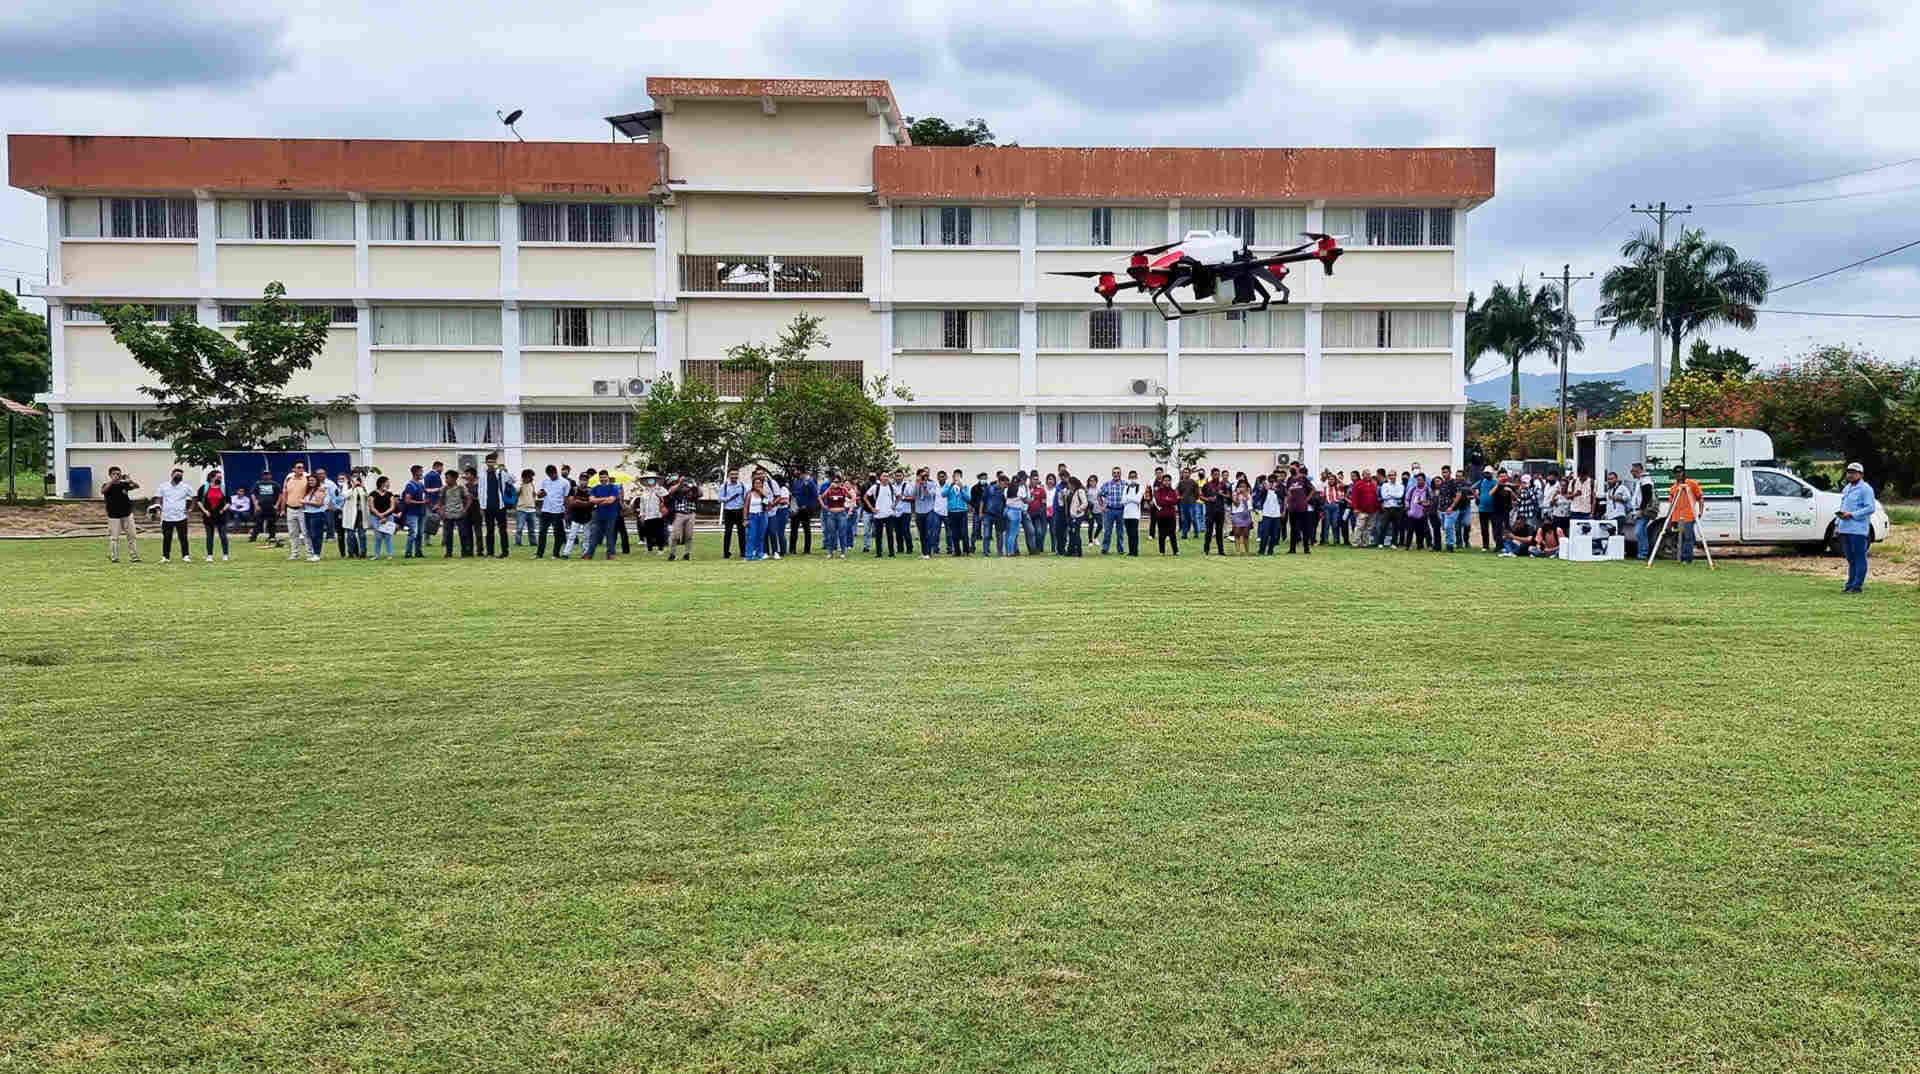 XAG drone was demonstrating autonomous operation